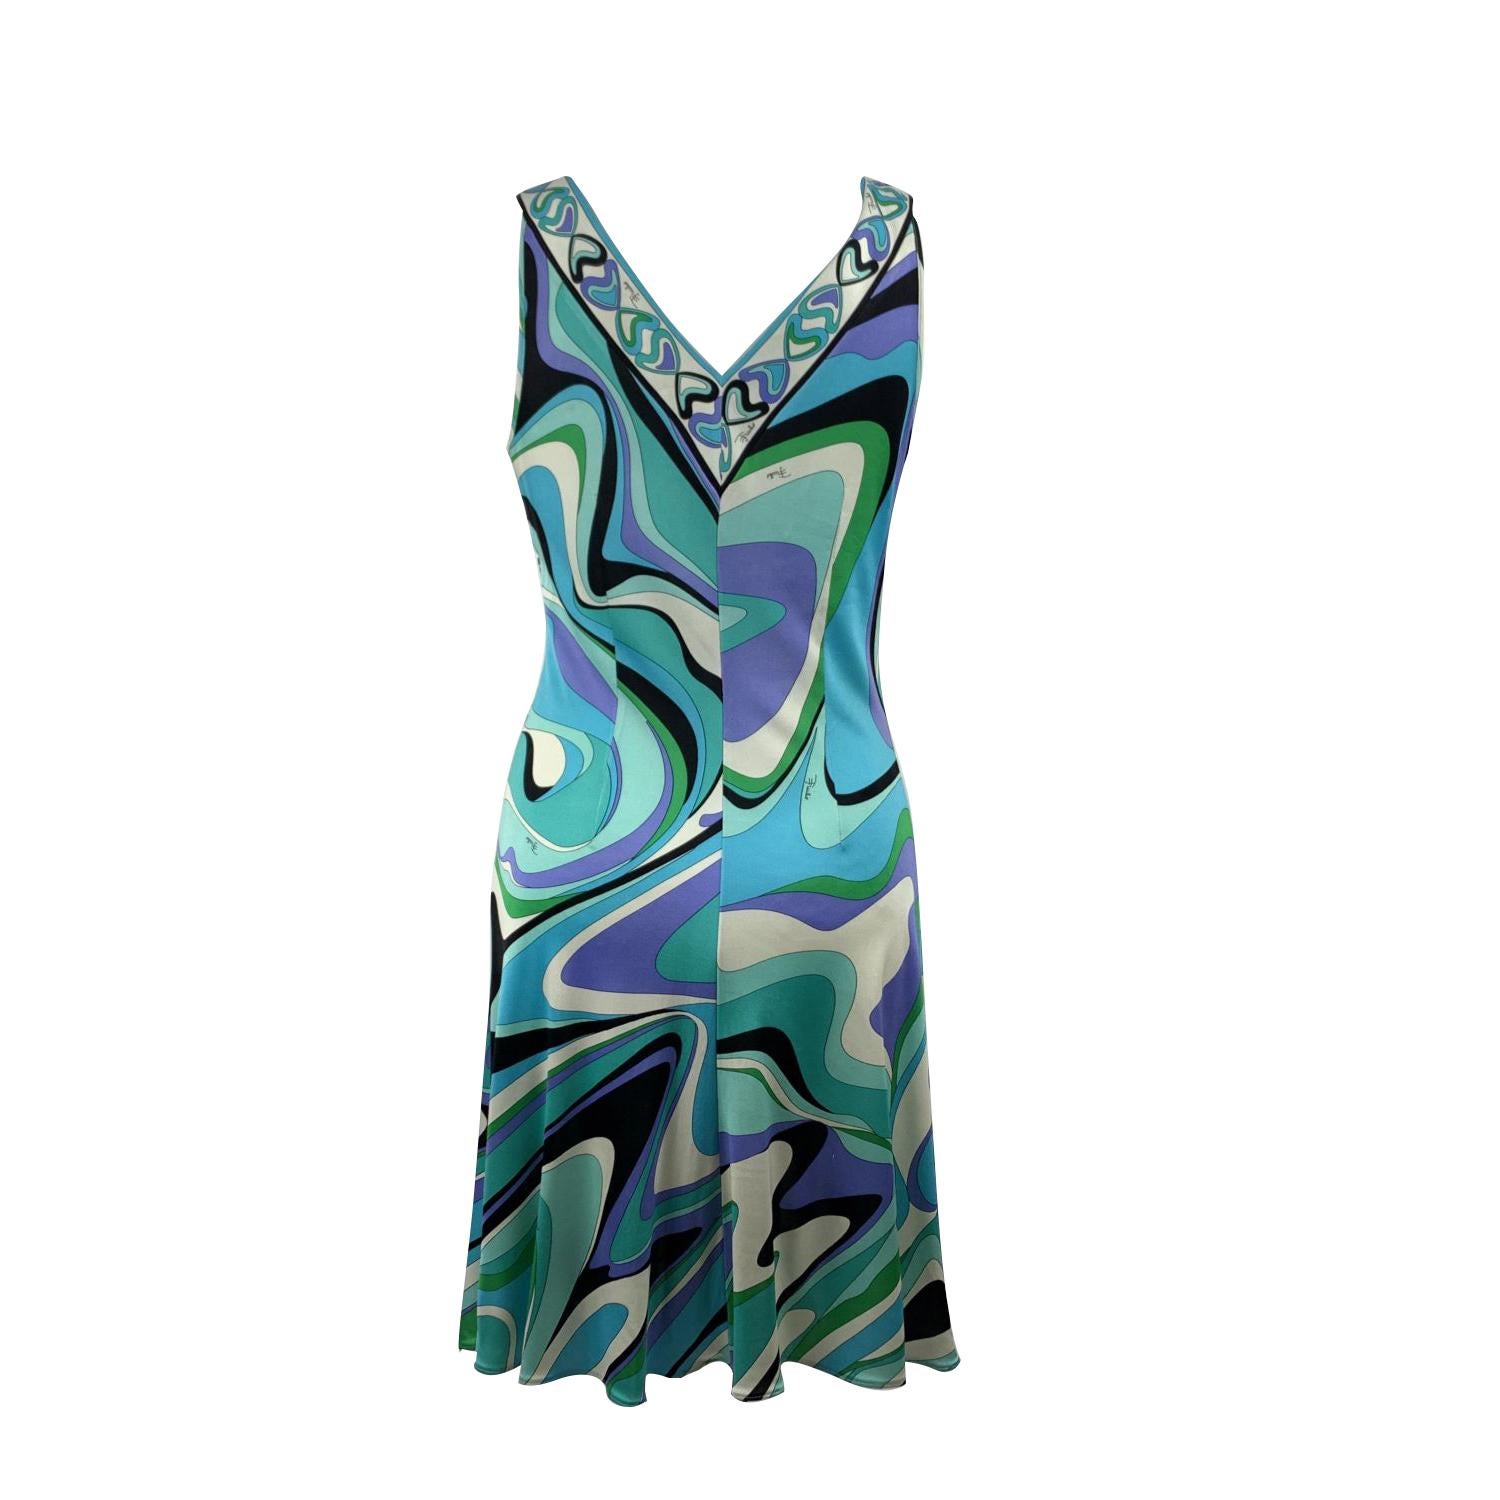 Blue Emilio Pucci Turquoise Printed Silk Jersey Sleeveless Dress Size 42 IT